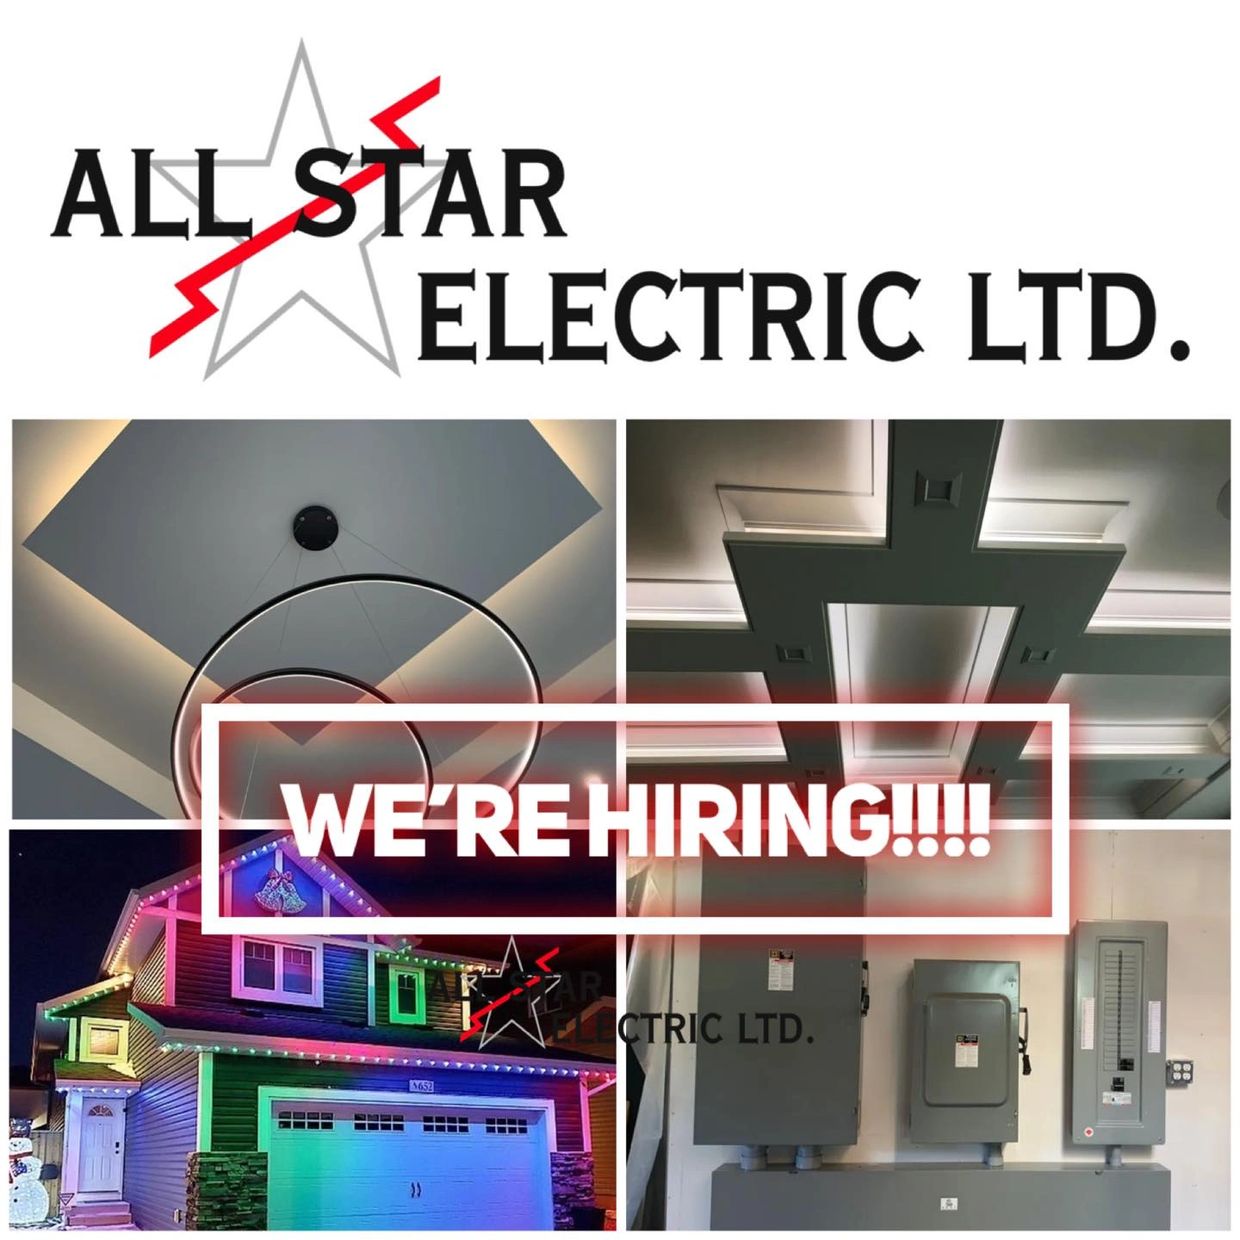 All Star Electric Ltd. serving Saskatoon & Areas Electrical needs